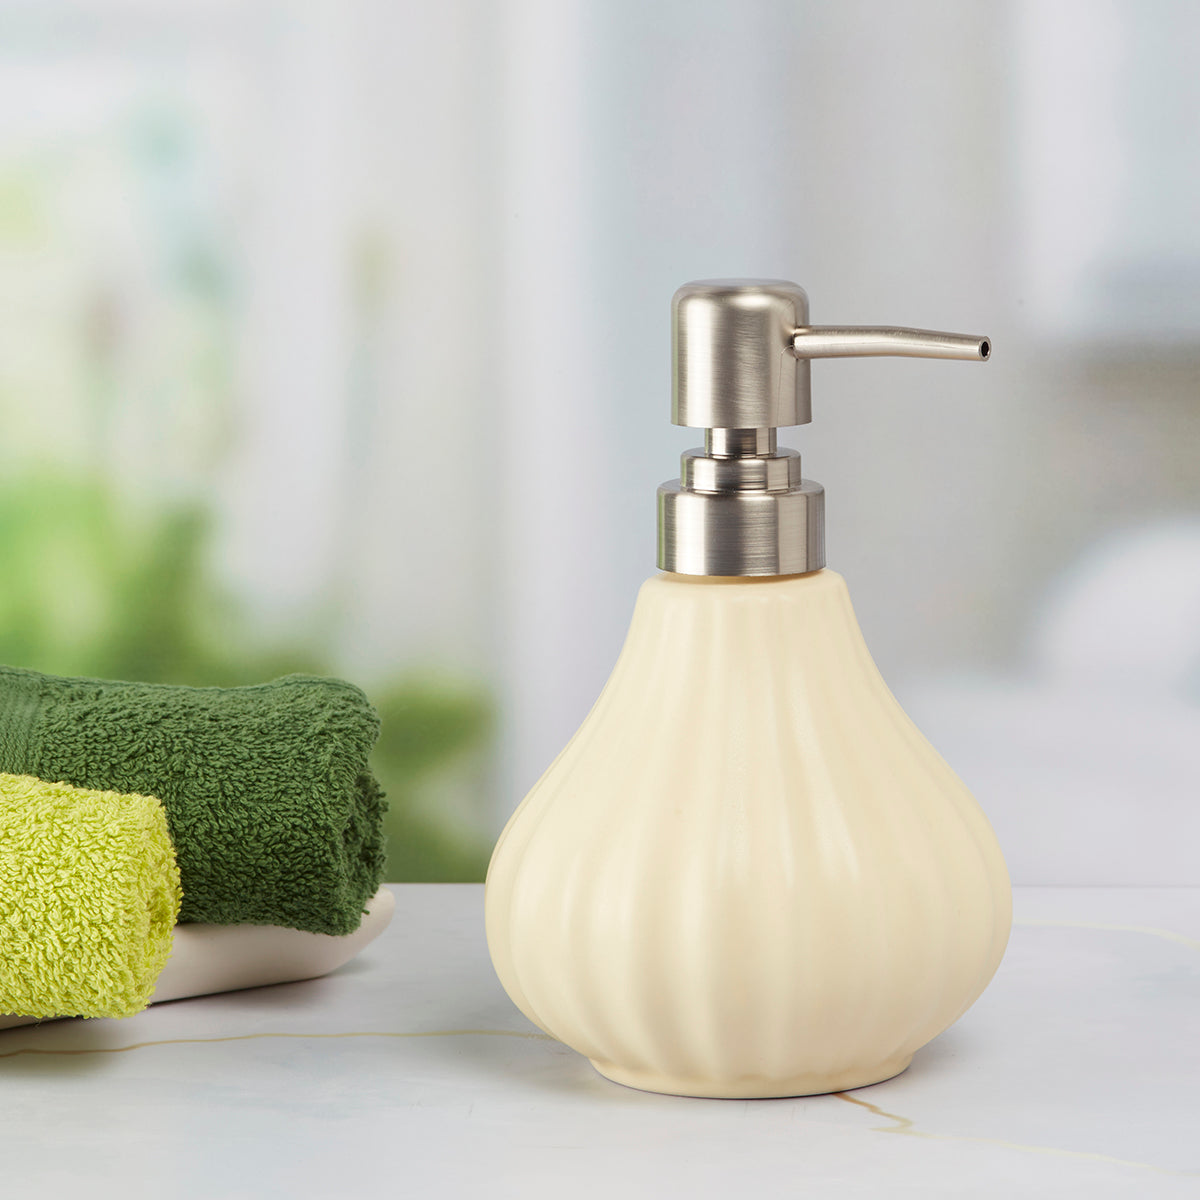 Kookee Ceramic Soap Dispenser for Bathroom handwash, refillable pump bottle for Kitchen hand wash basin, Set of 1, Cream (8645)